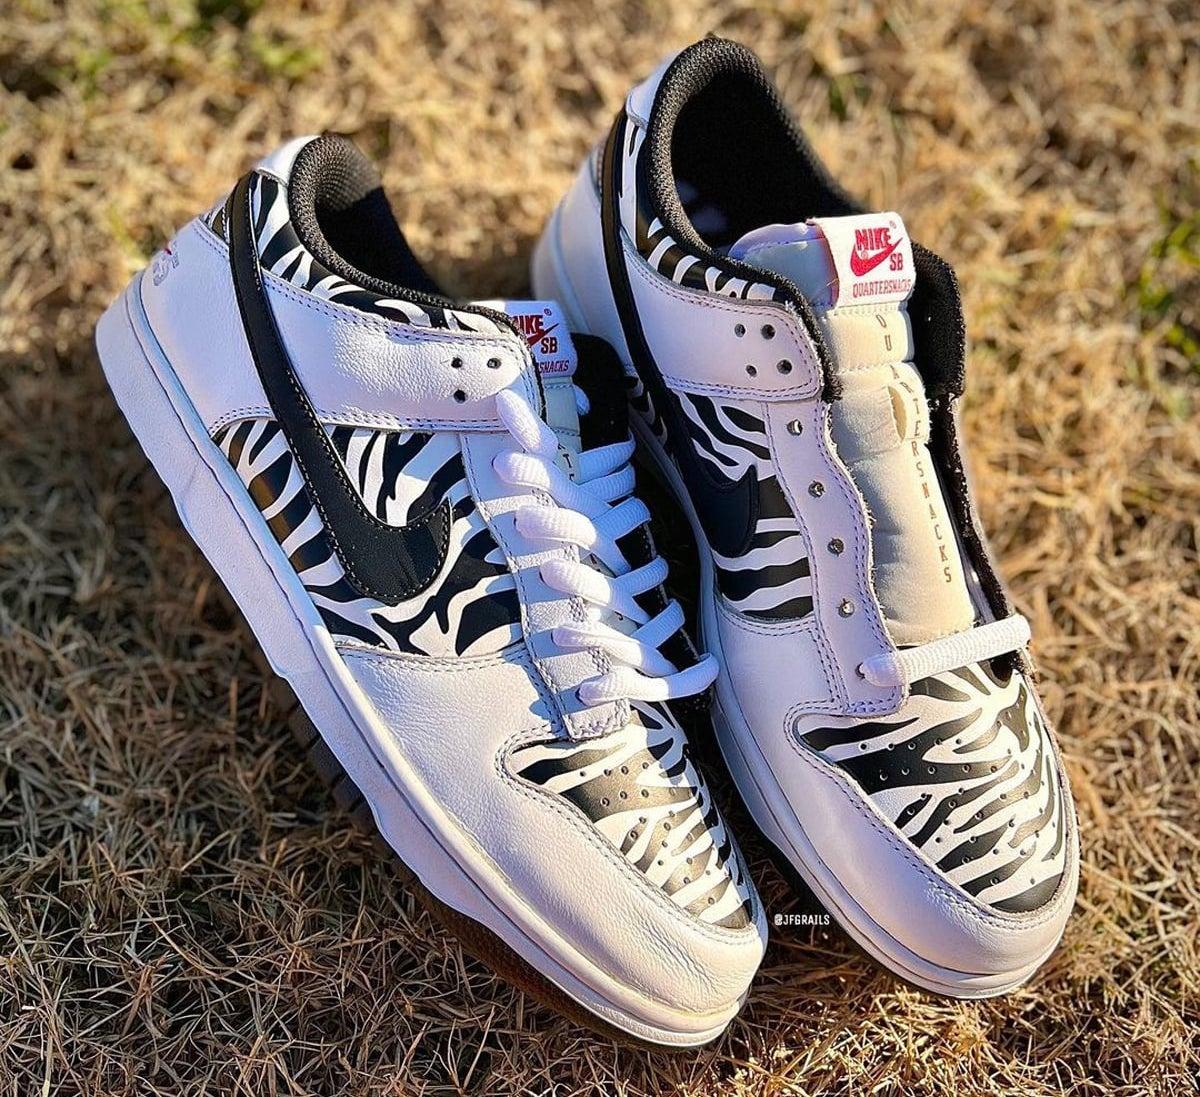 The Quartersnacks x Nike SB Dunk Low 'Reverse Zebra'